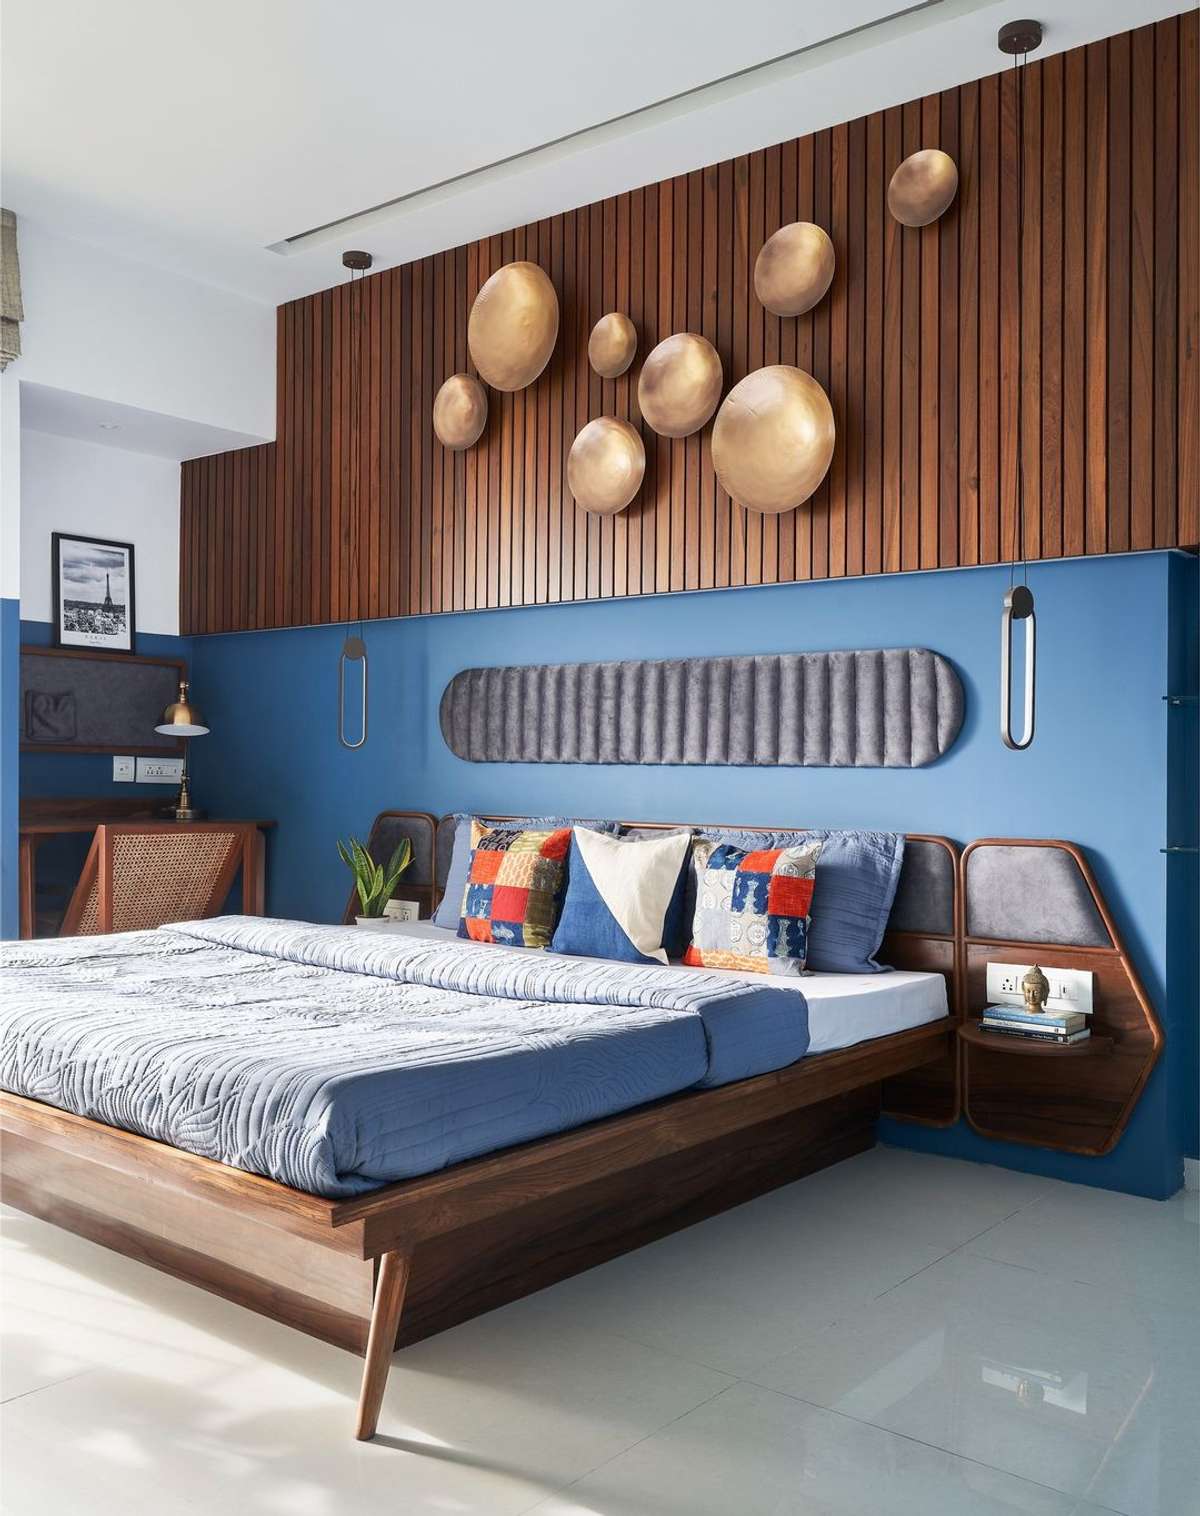 BEDROOM  

#BedroomDecor #MasterBedroom #BedroomIdeas #BedroomDesigns #bedroomdesign #Designs #InteriorDesigner #Plywood #plywoodmanufacturer #plywoodfurniture #plywooddesign